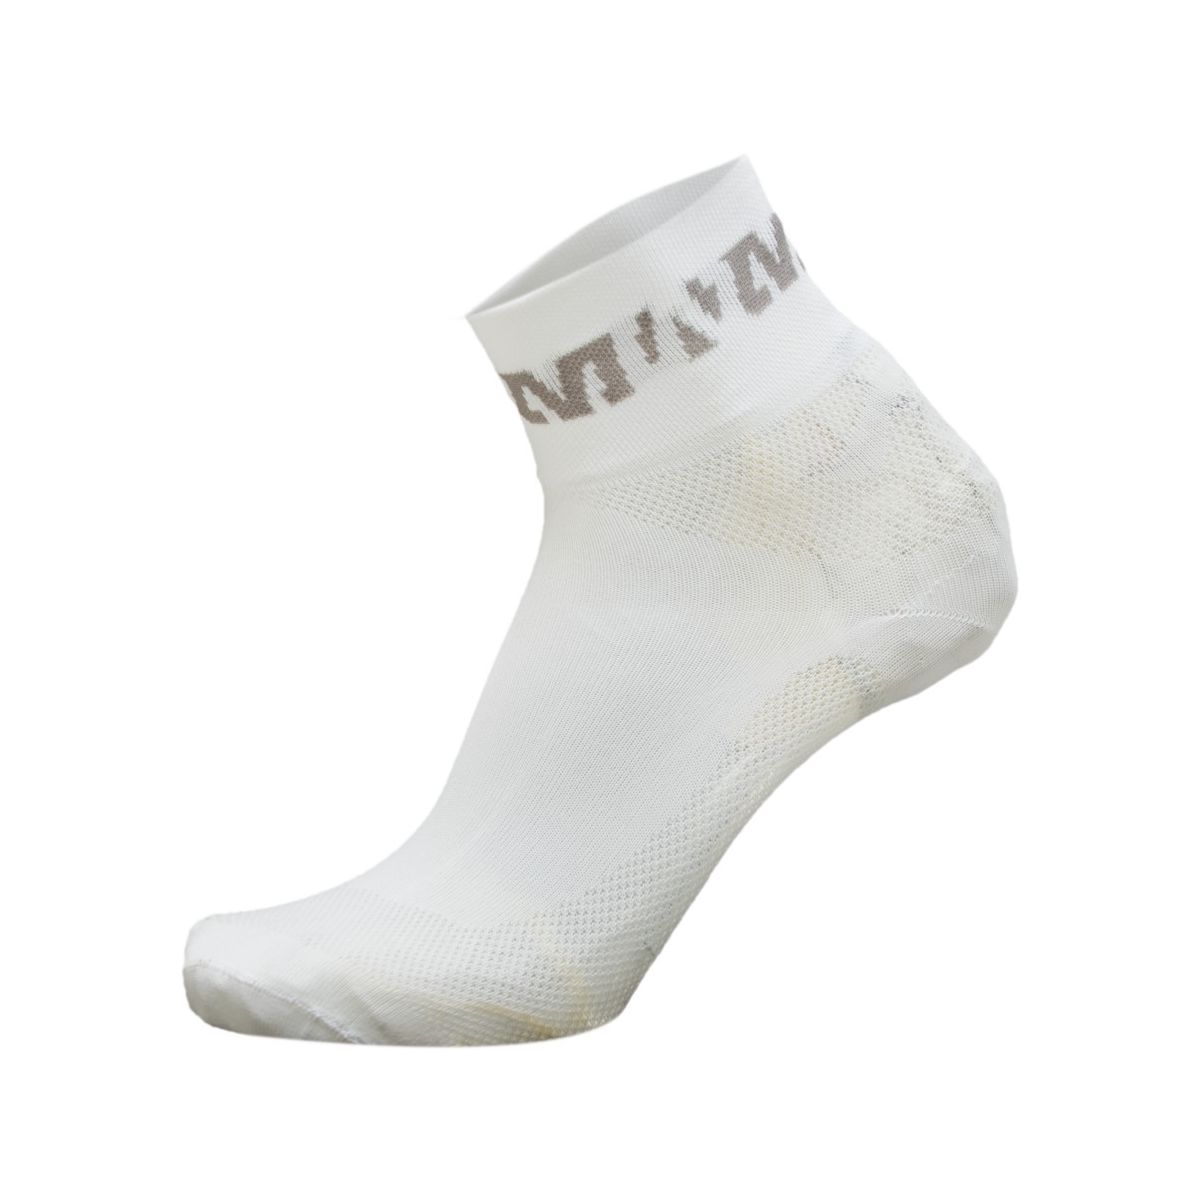 Mavic calcetines Race Sock blanco